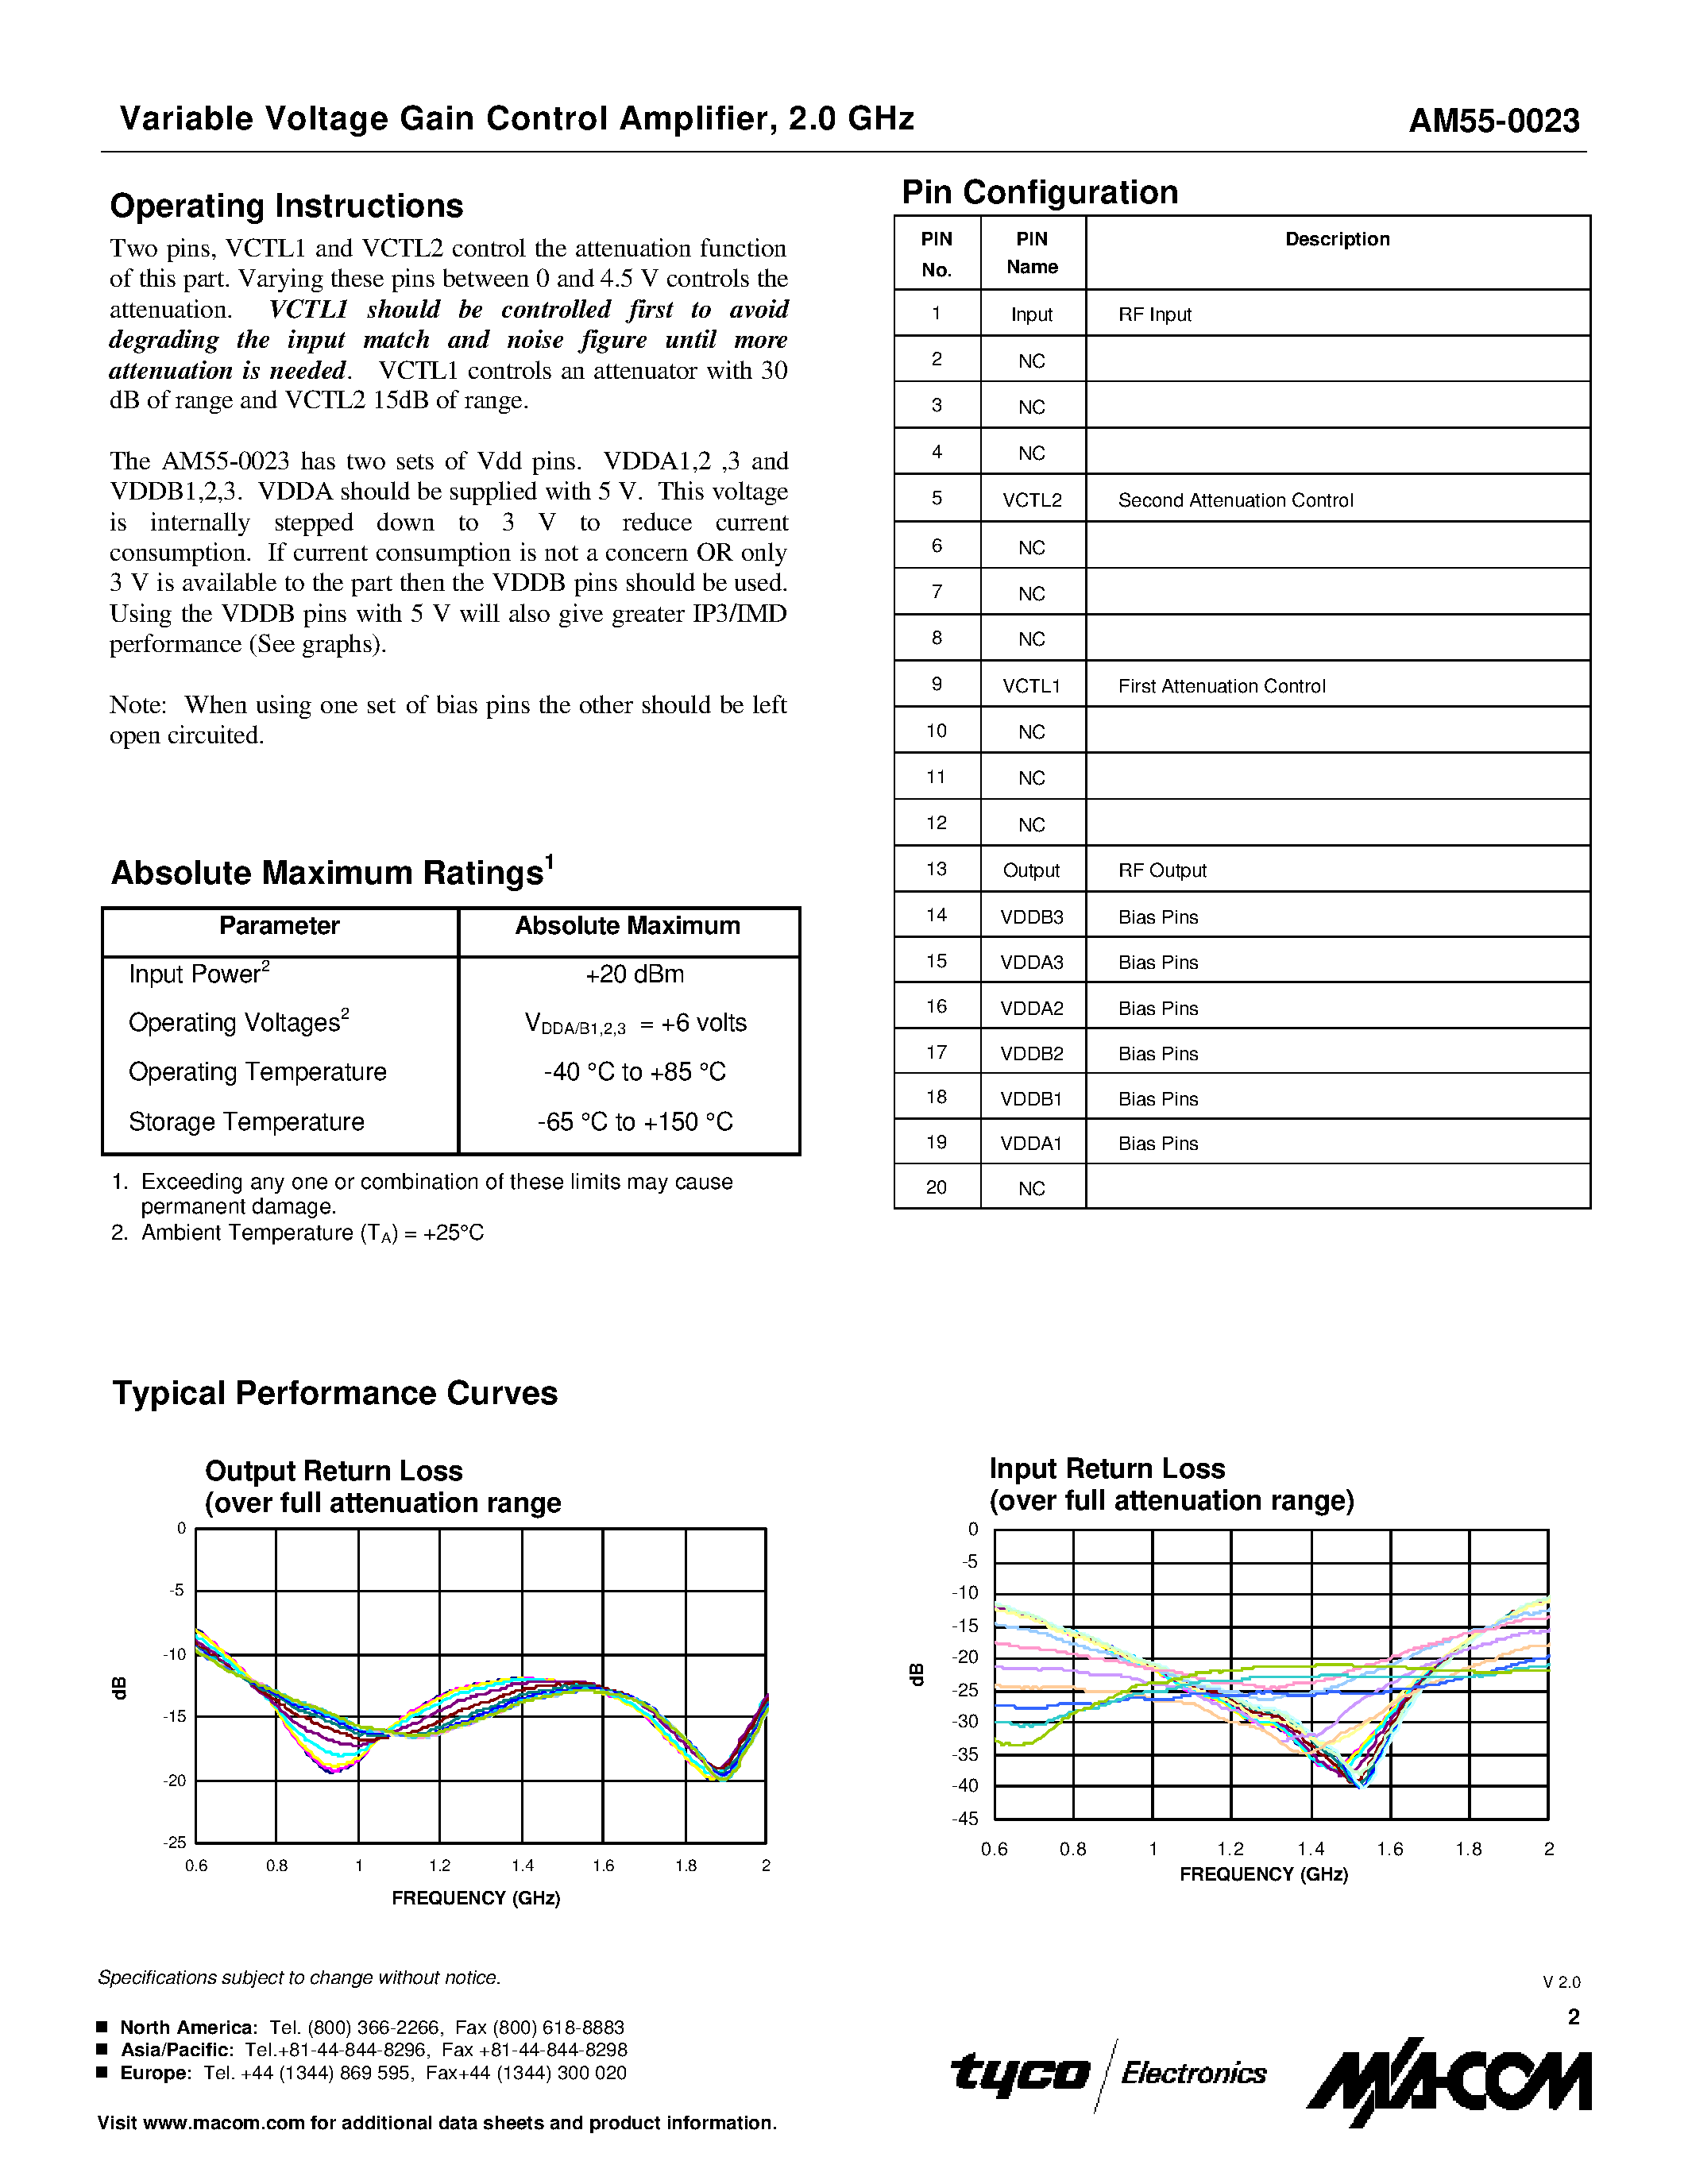 Даташит AM55-0023SMB - Variable Voltage Gain Control Amplifier 0.8 - 2.0 GHz страница 2